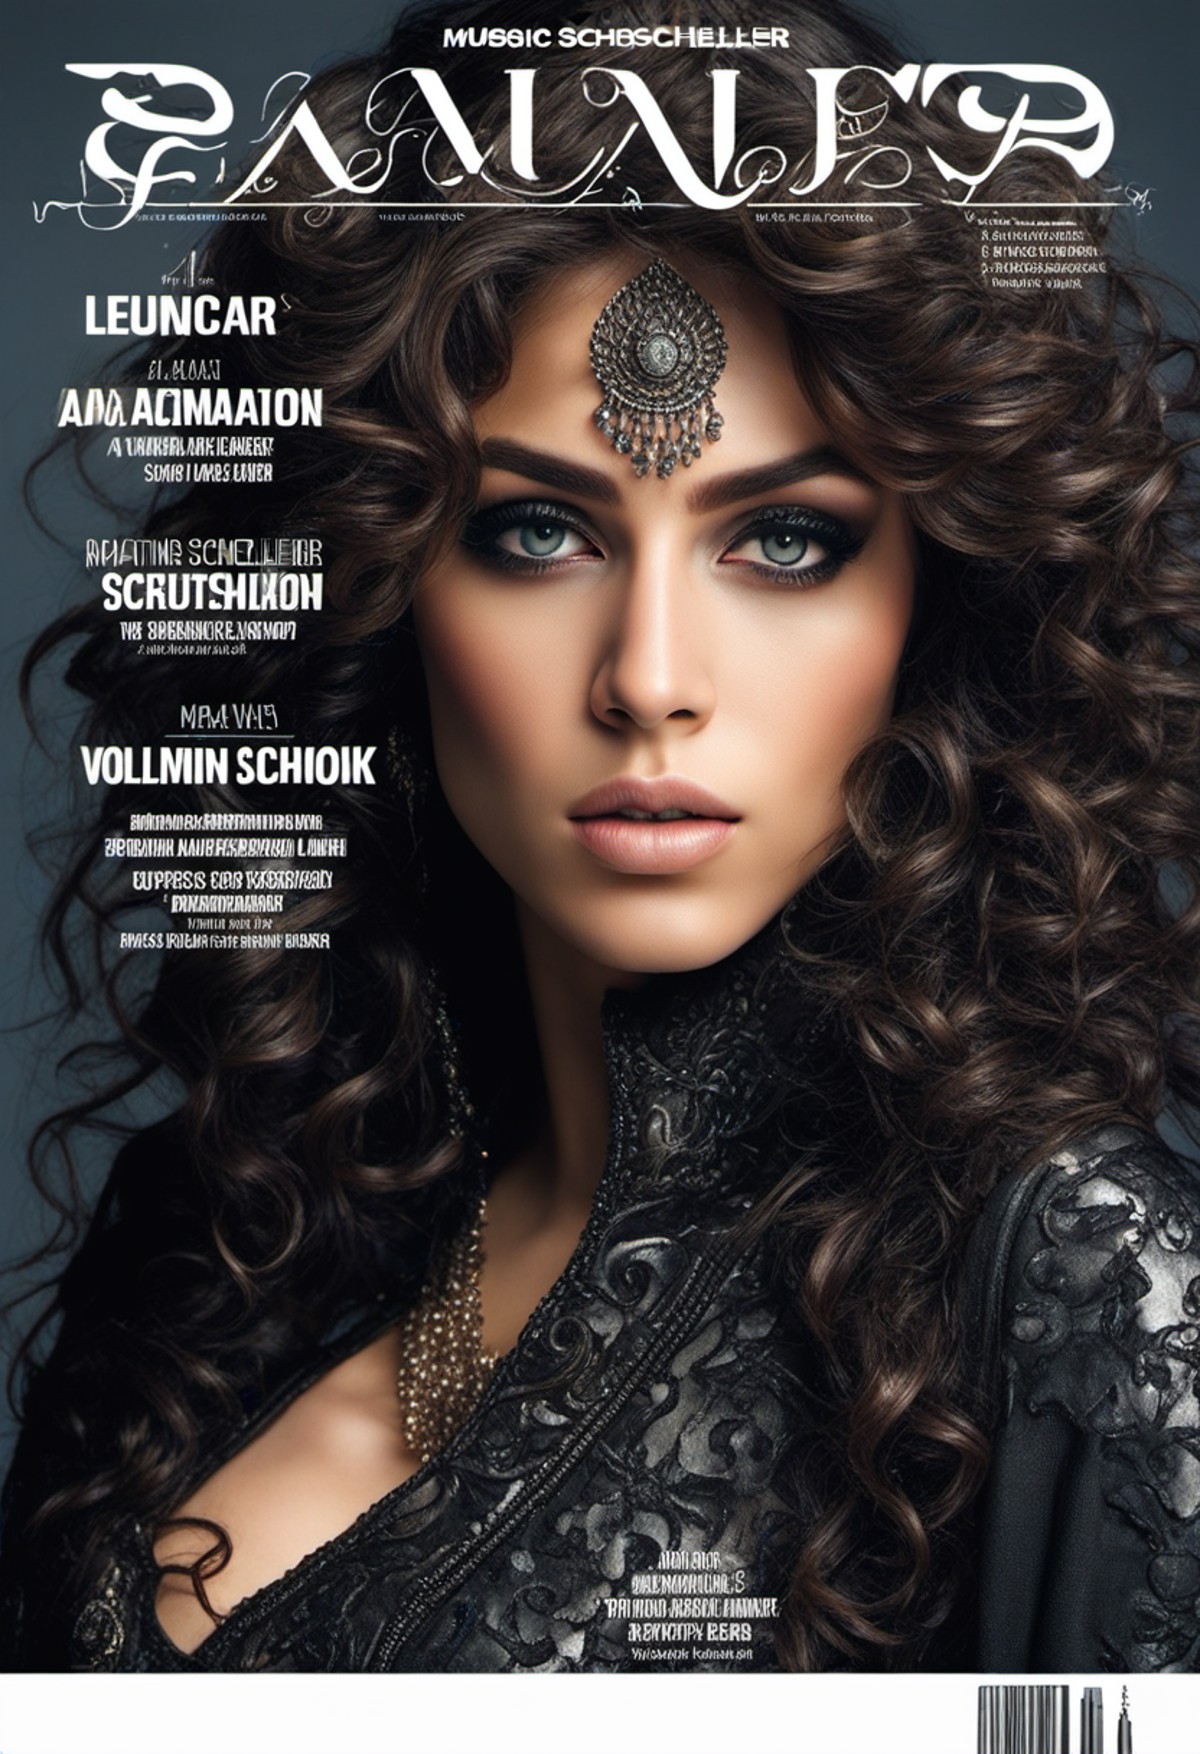 (Music Magazine cover:1.3),(candid 1.3) photo of a vivacious Iranian girl, Striking eyes, voluminous wavy hair,lipgloss, w...